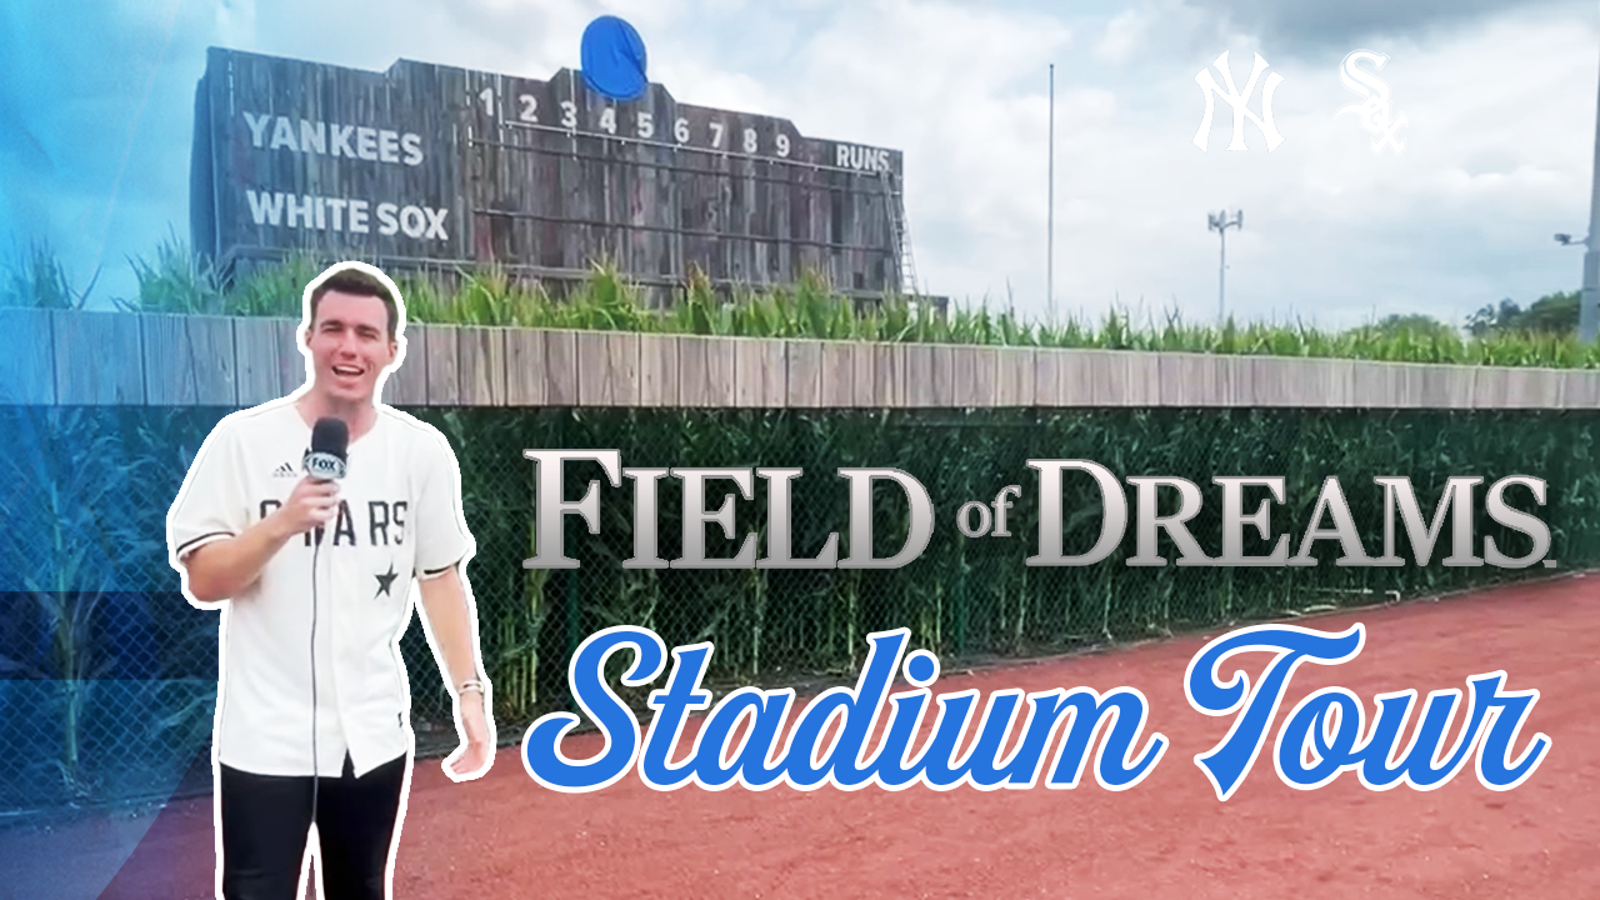 Ben Verlander's Yankees vs. White Sox 'Field of Dreams' stadium tour